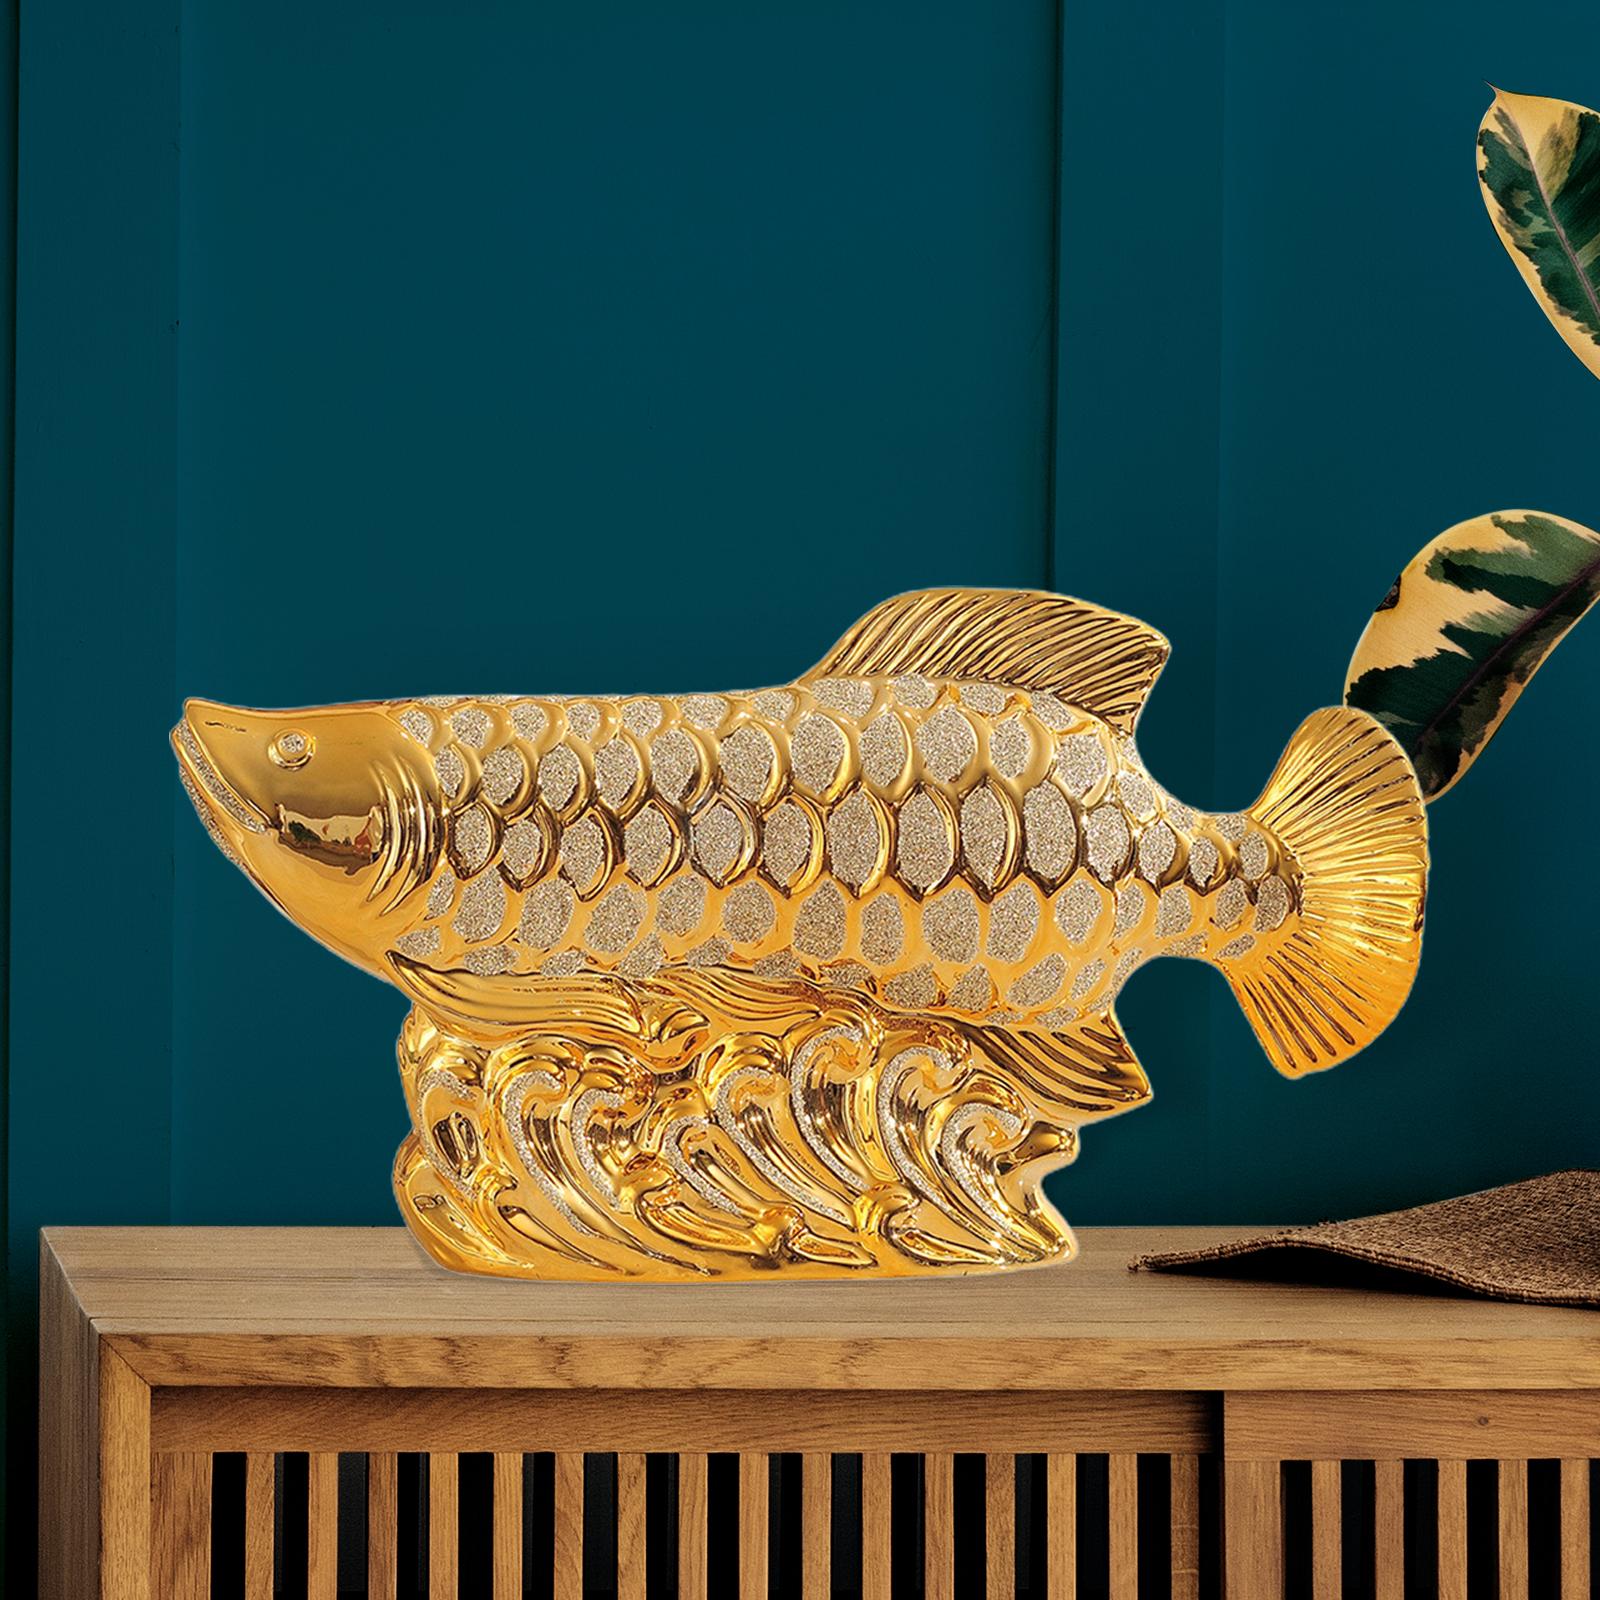 Creative Fish Statue Ceramic Porcelain Figurine for Cabinet Bookshelf Decor M